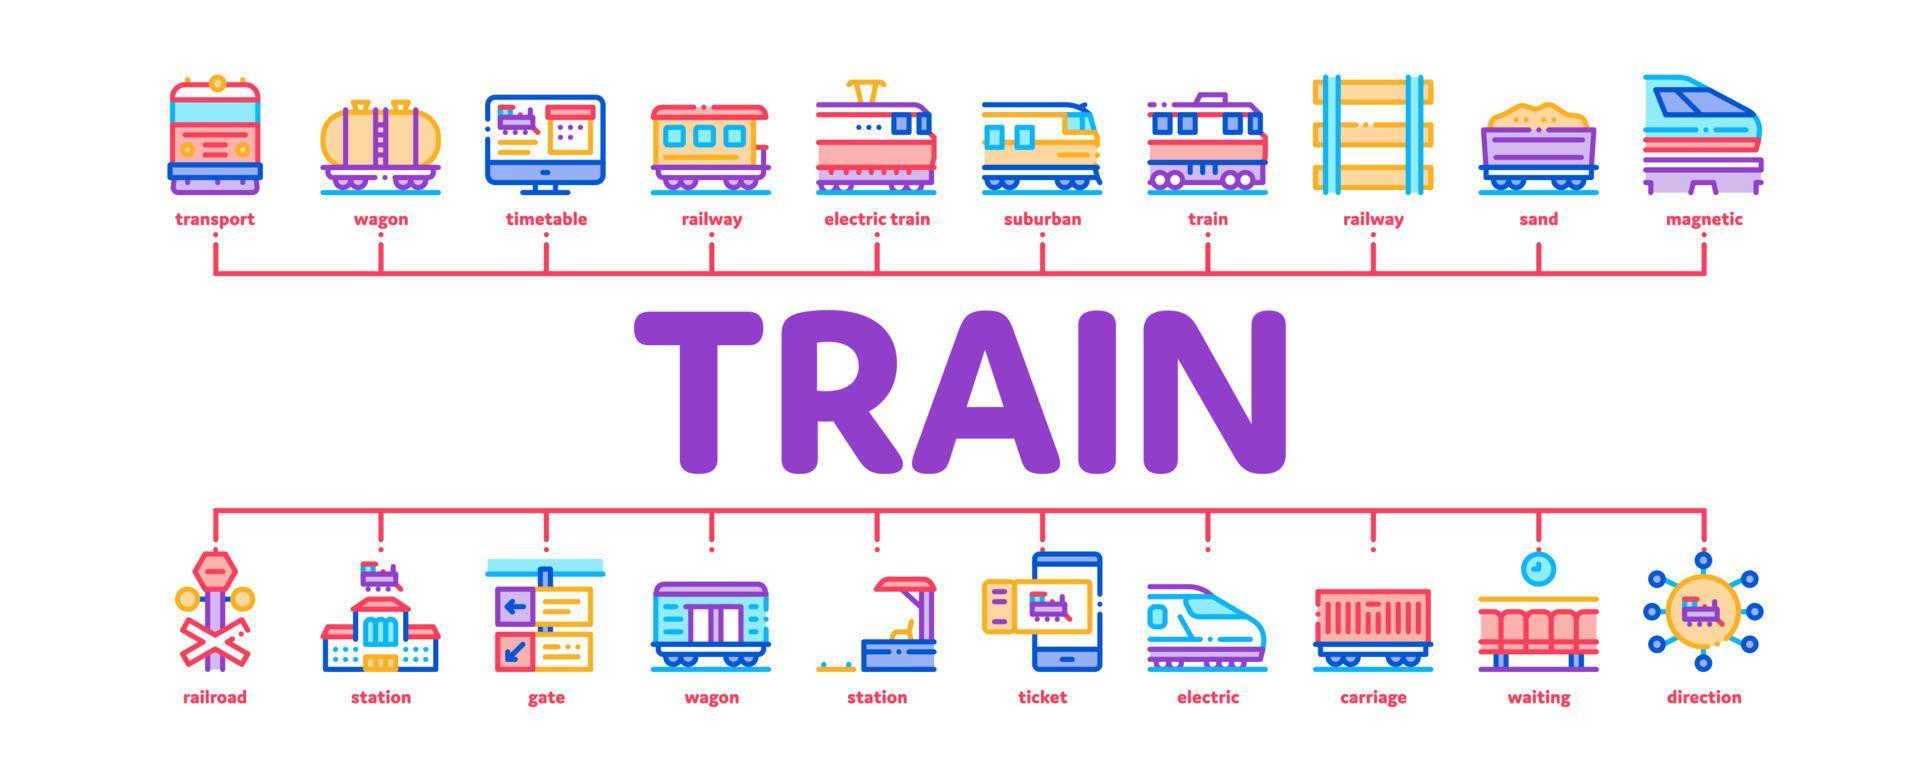 tren transporte ferroviario vector de banner infográfico mínimo